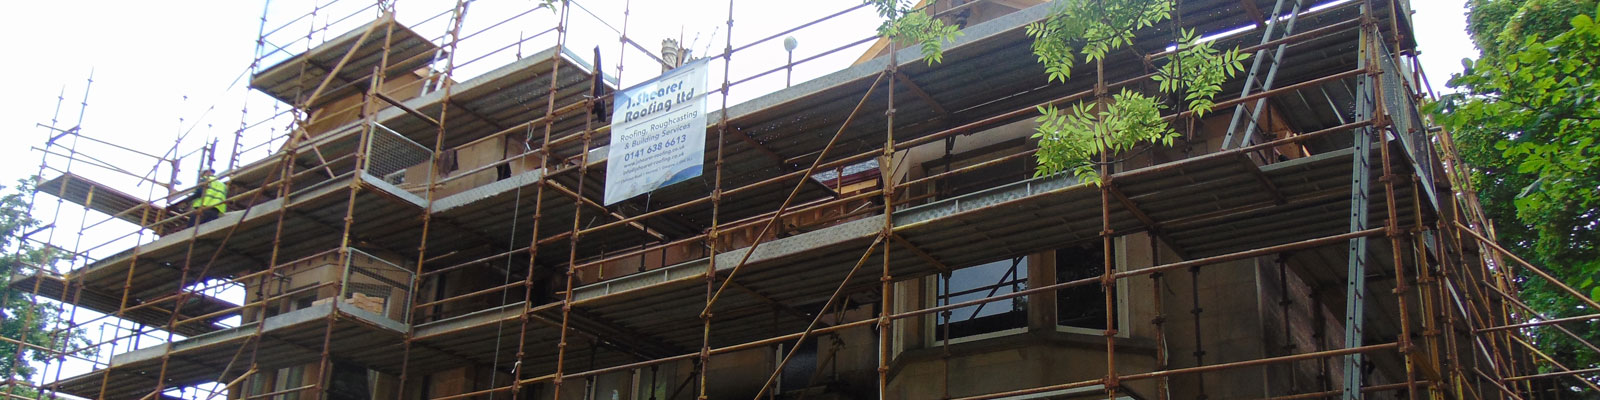 Roof Repairs Testimonials across Glasgow